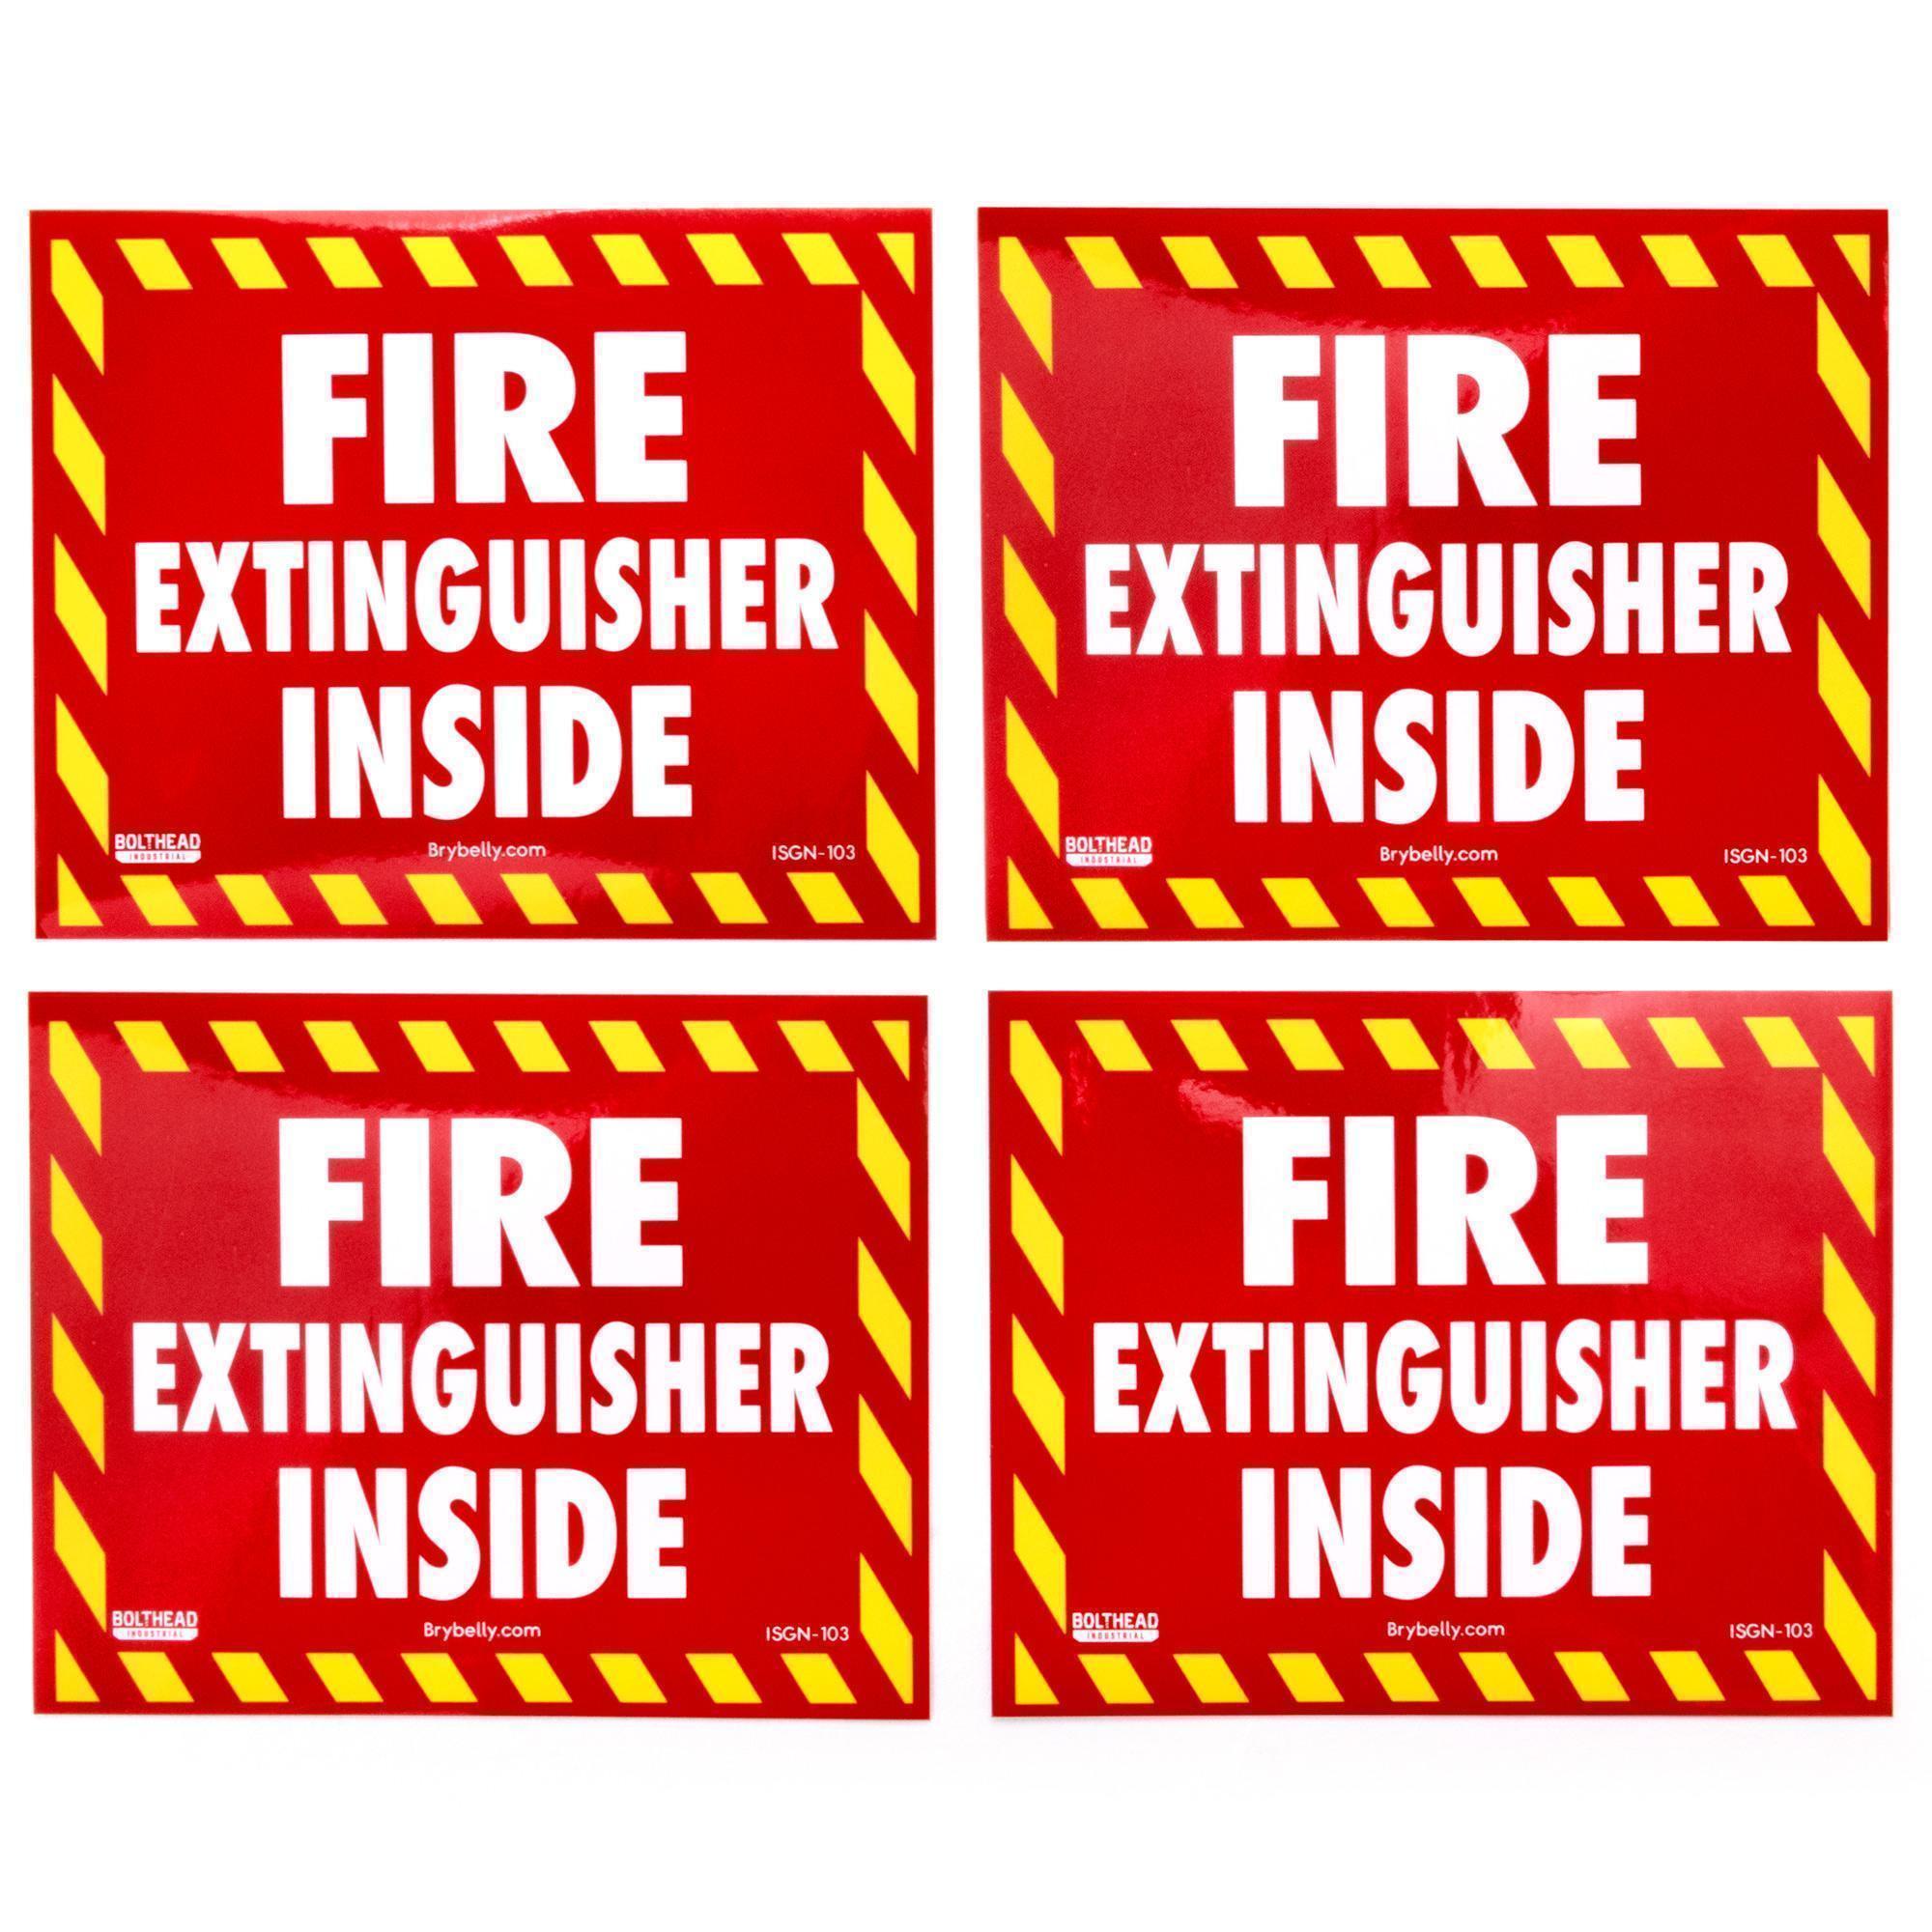 Fire Extinguisher Inside - Vinyl Sticker 4-pack